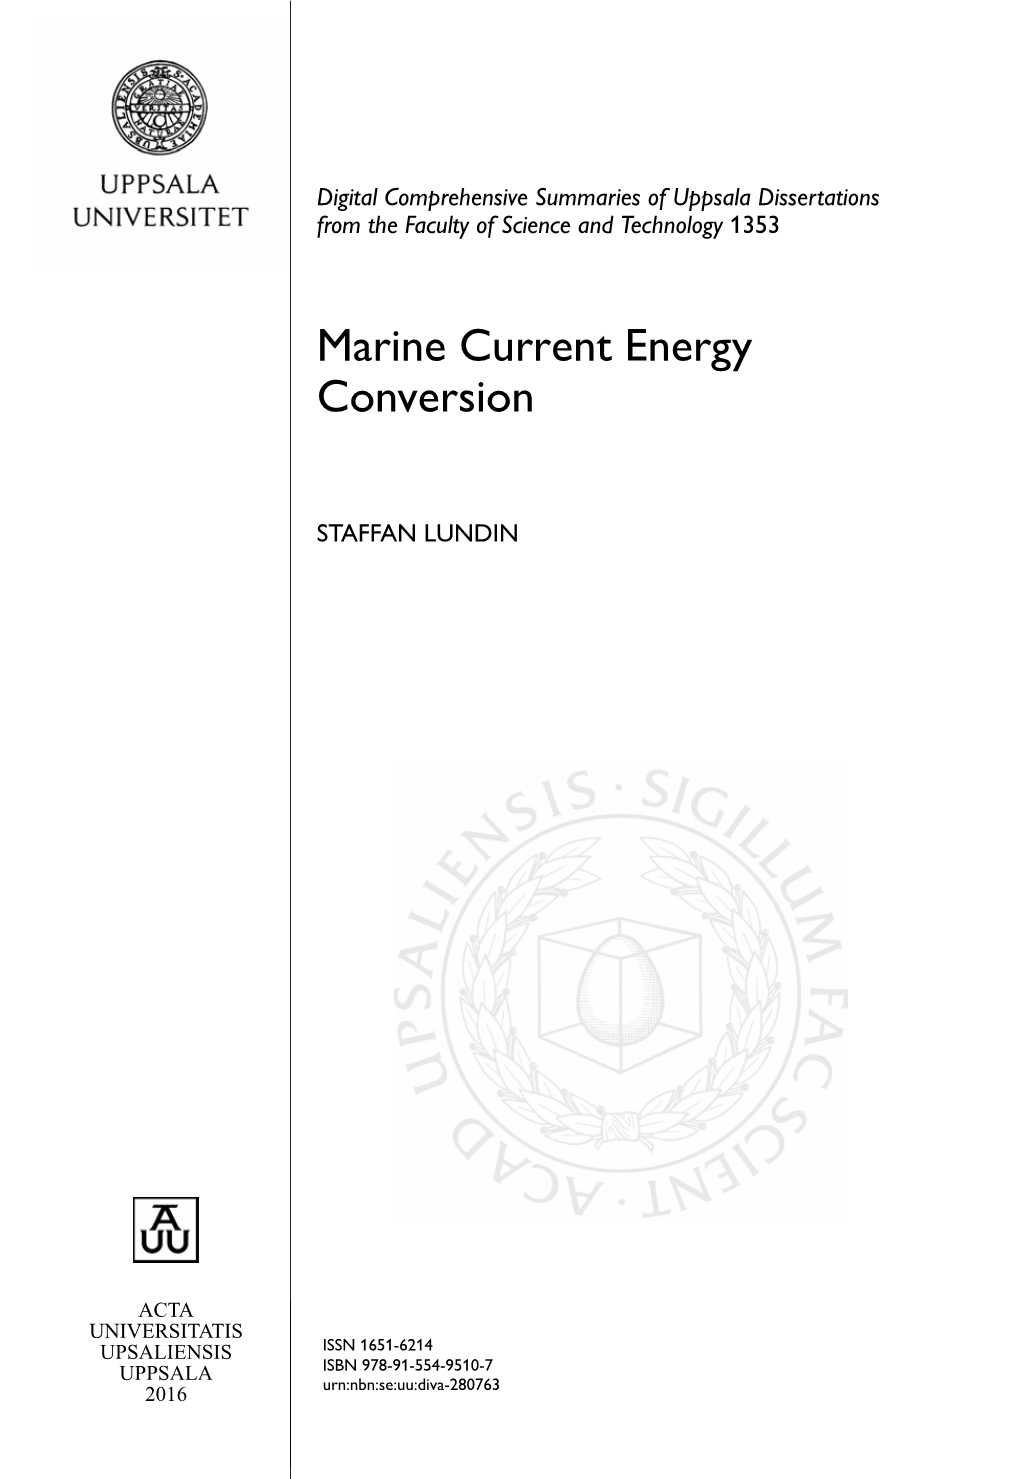 Marine Current Energy Conversion